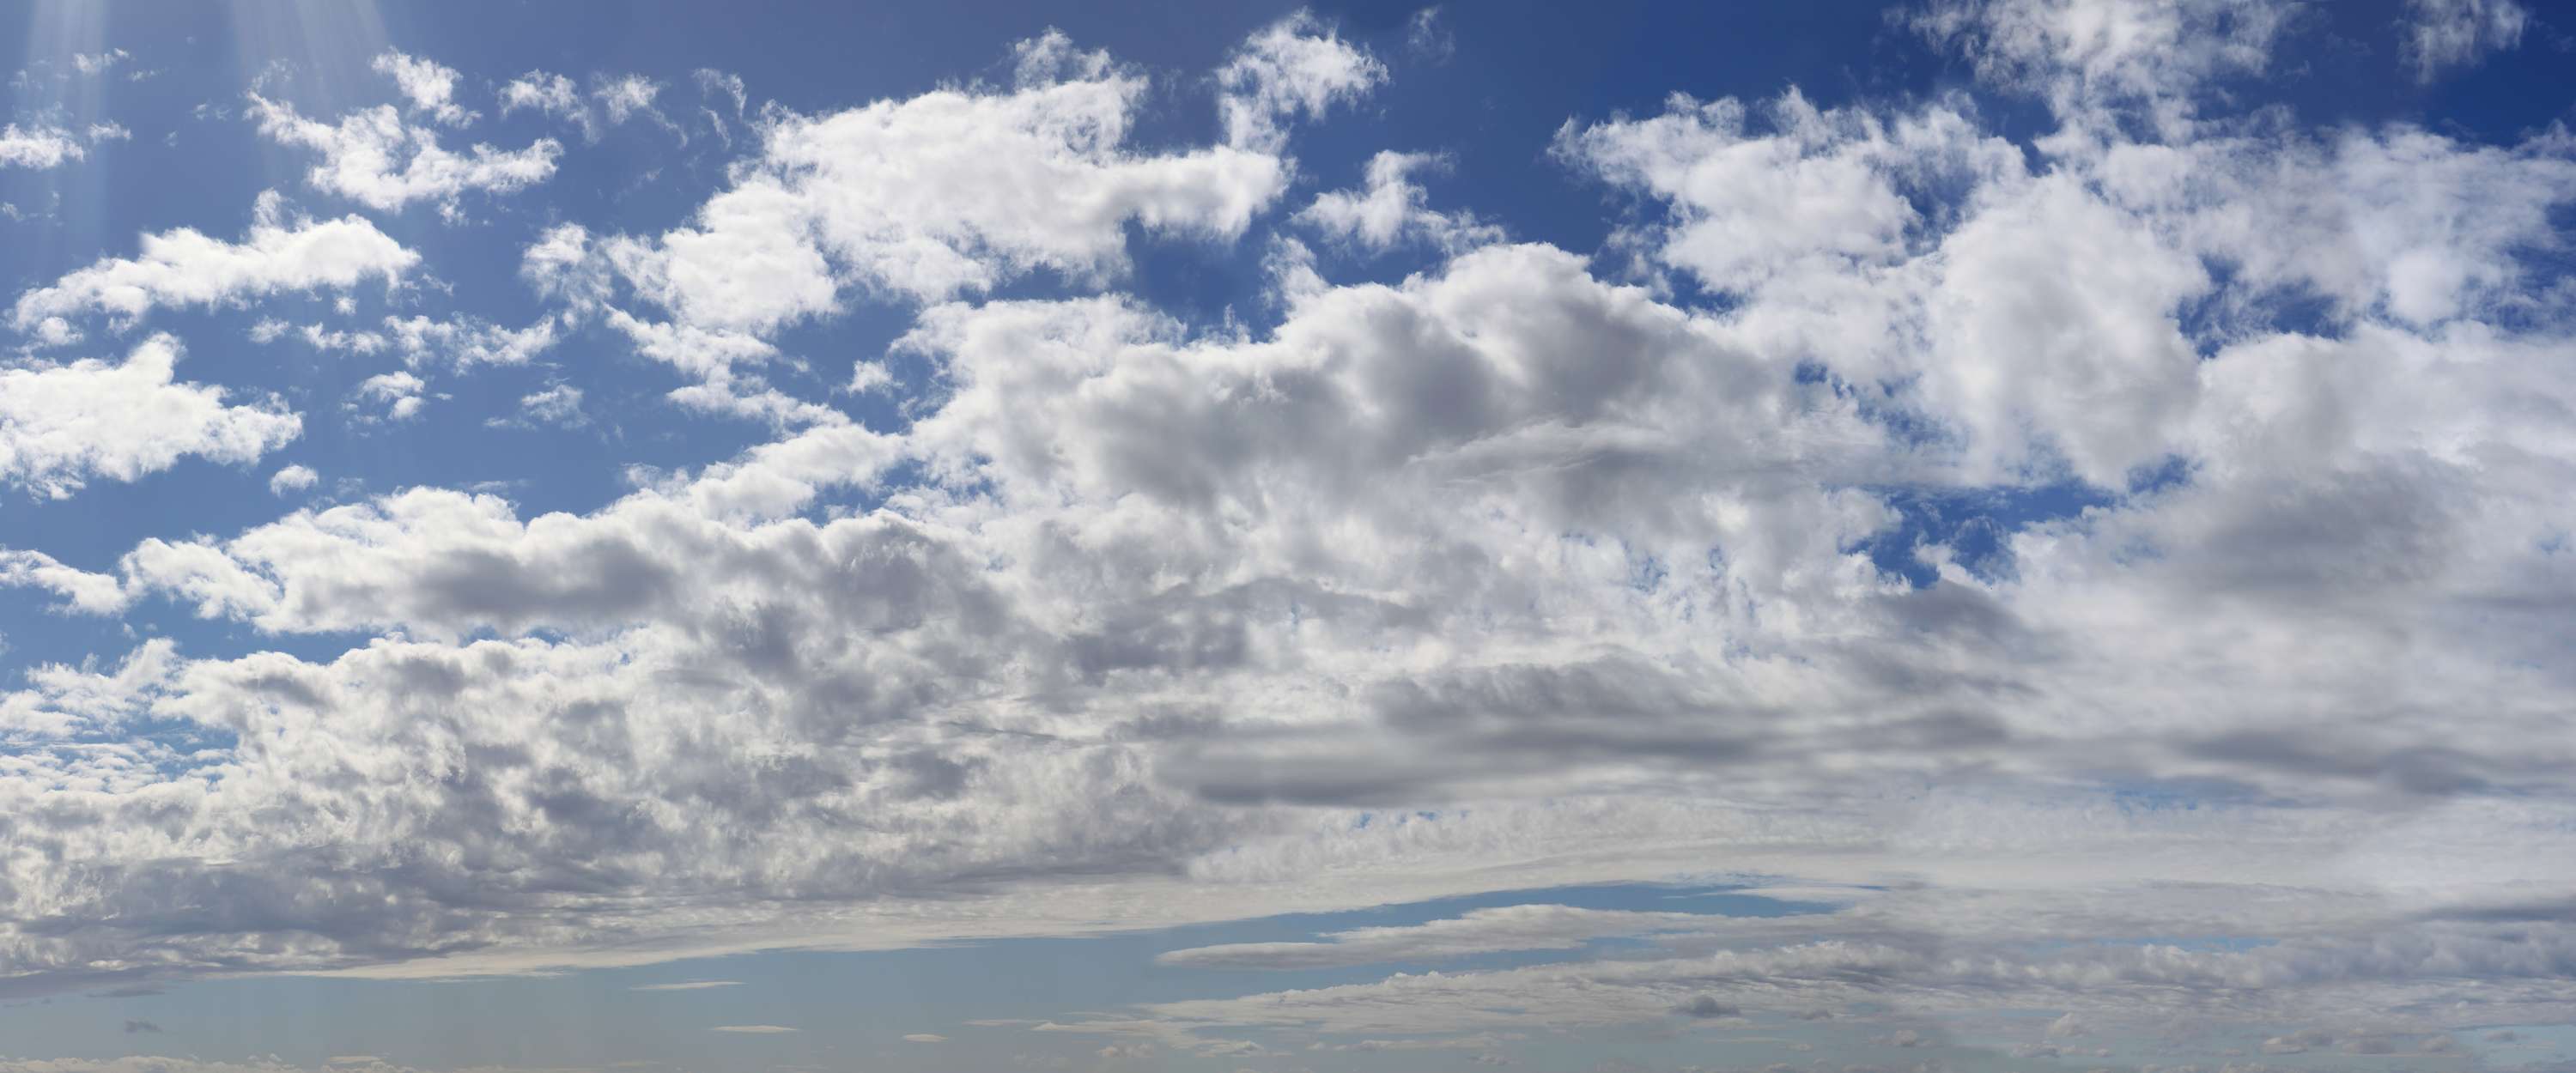             Cielo nuvoloso - carta da parati foto treno nuvola con cielo blu
        